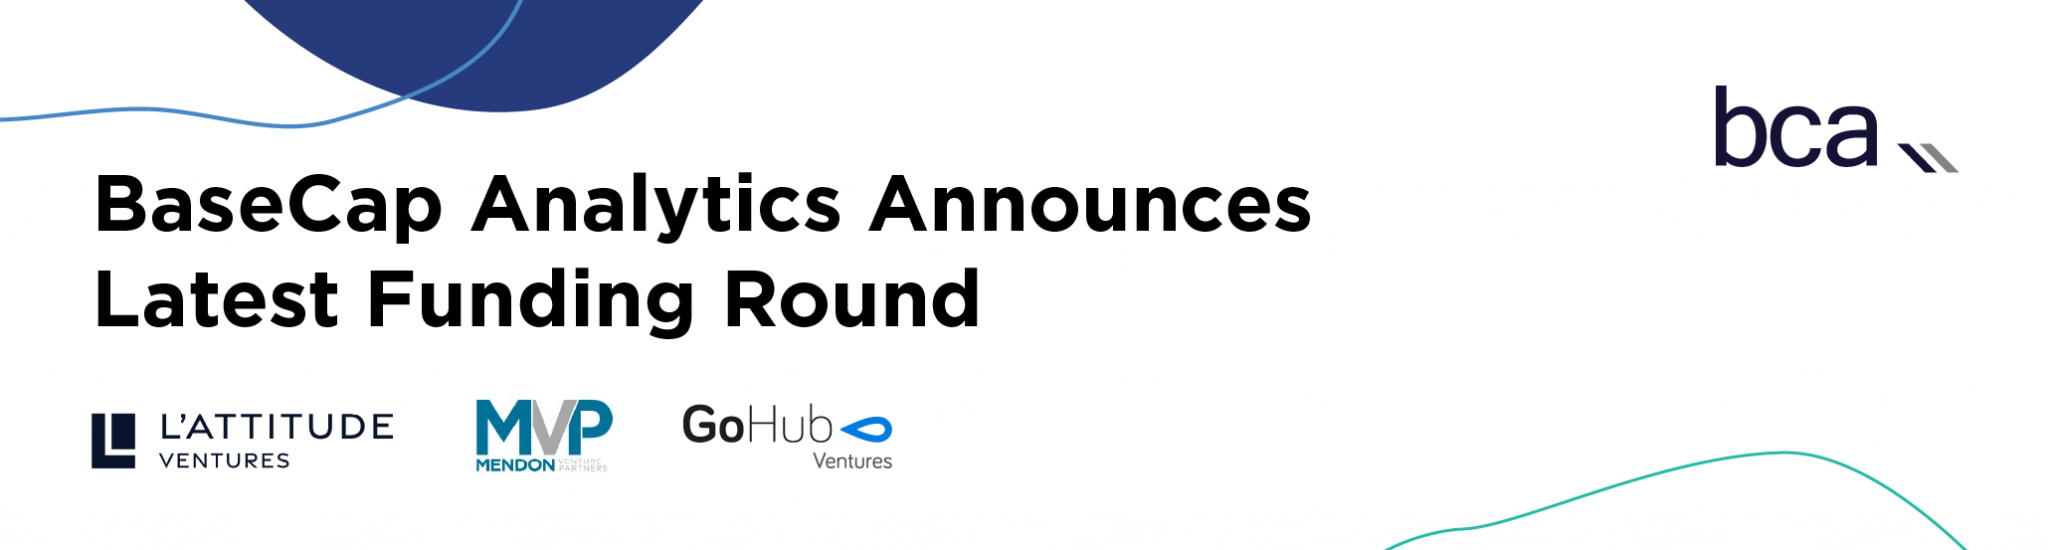 BaseCap Analytics announces latest funding round